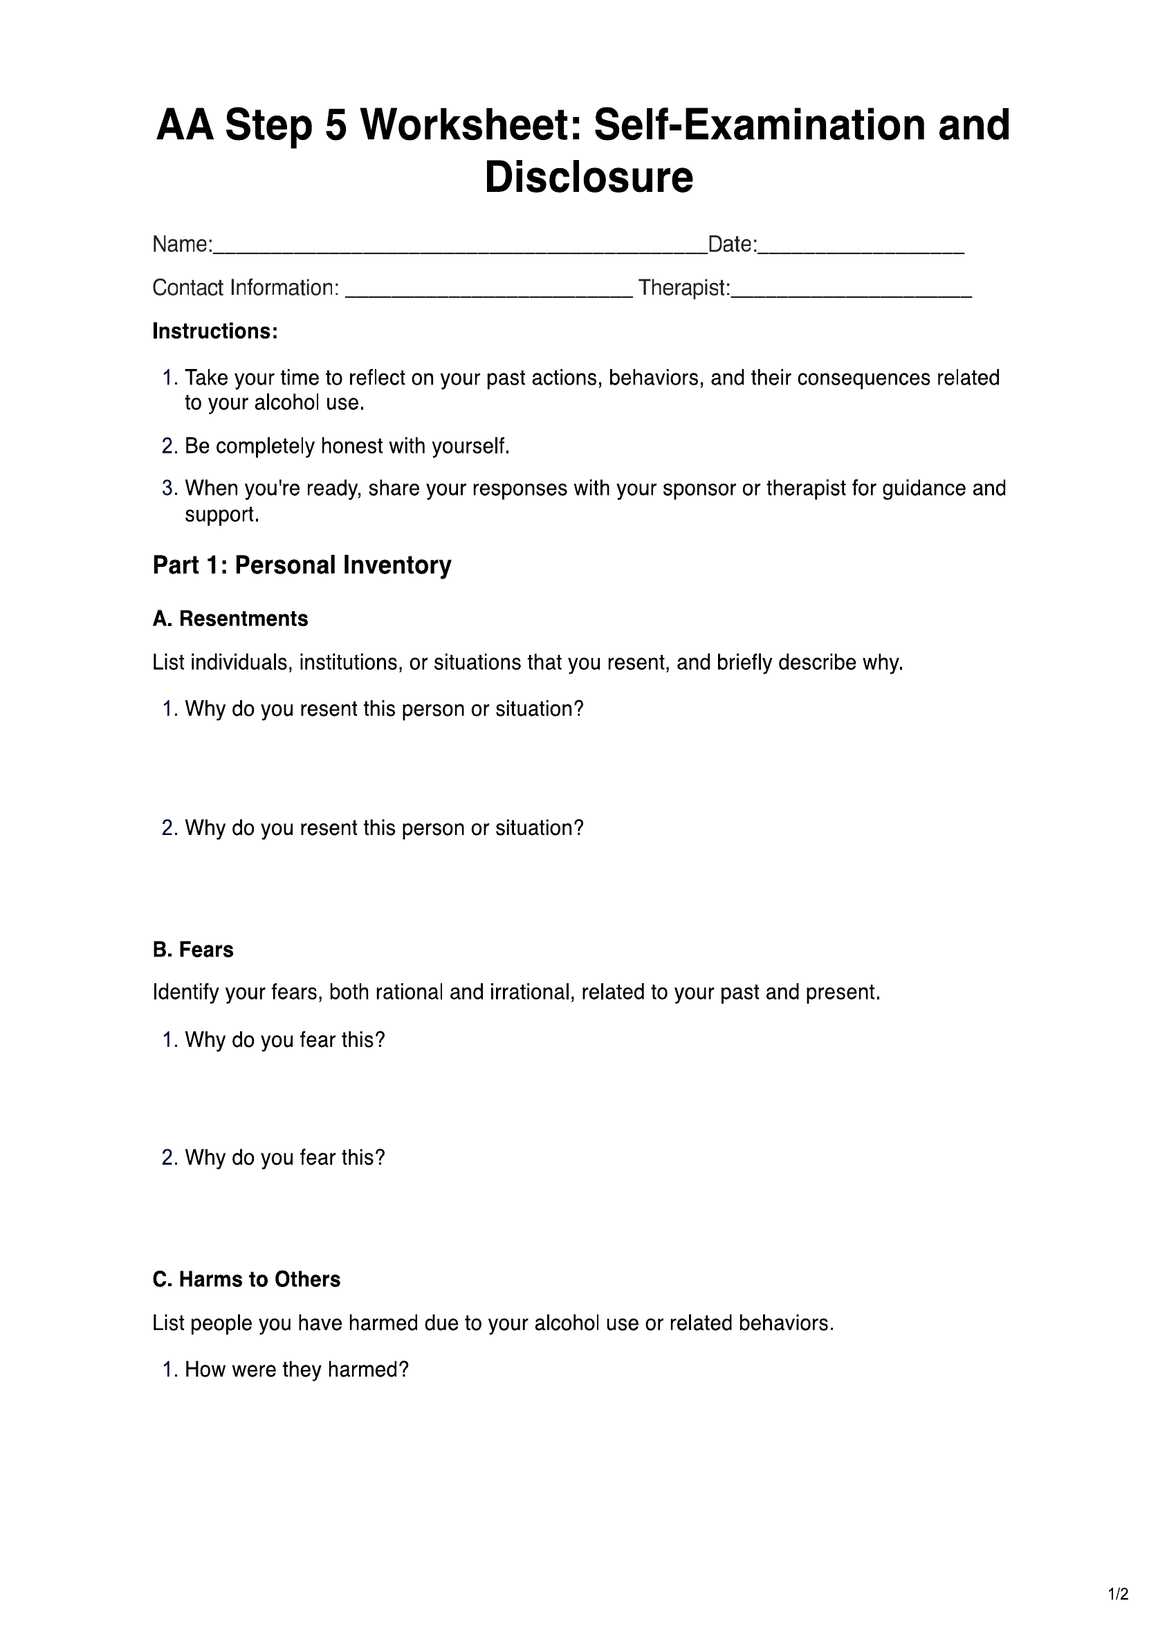 AA Step 5 Worksheets PDF Example